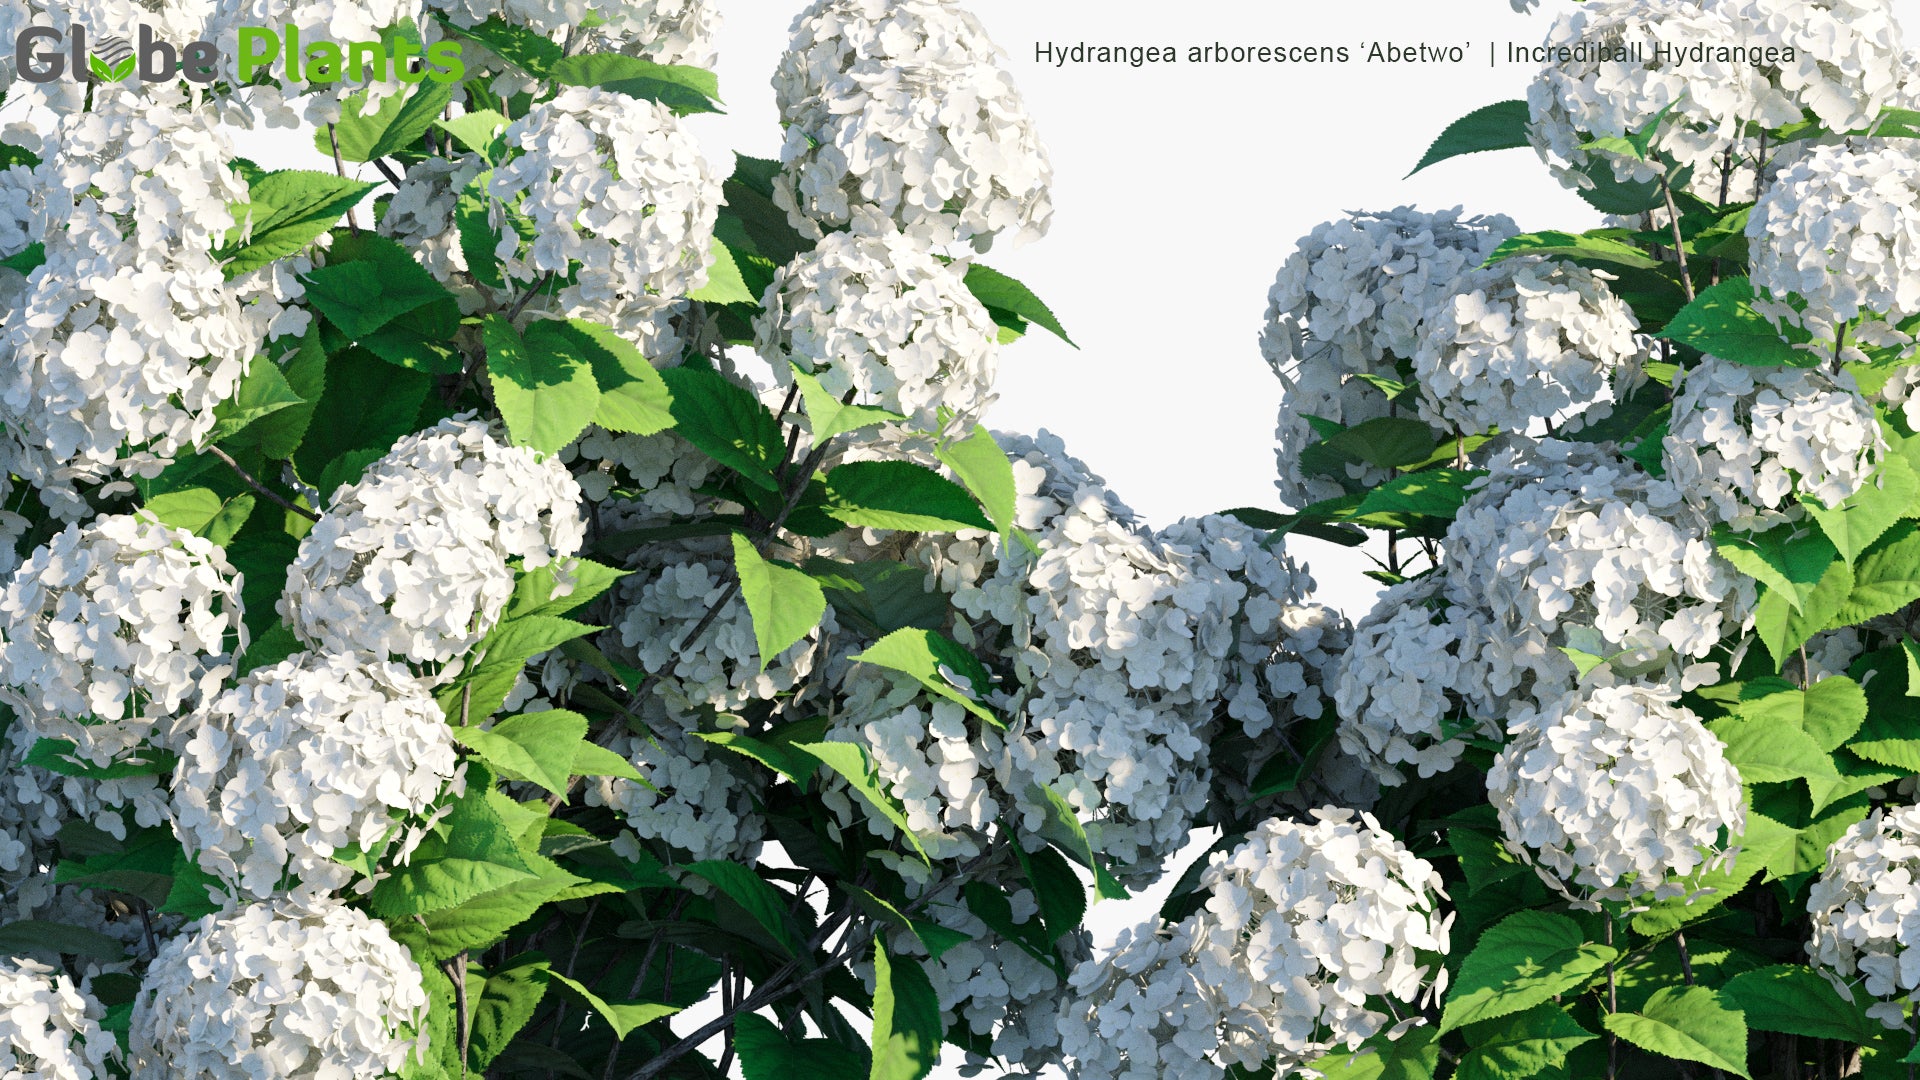 Hydrangea Arborescens 'Abetwo' - Incrediball Hydrangea